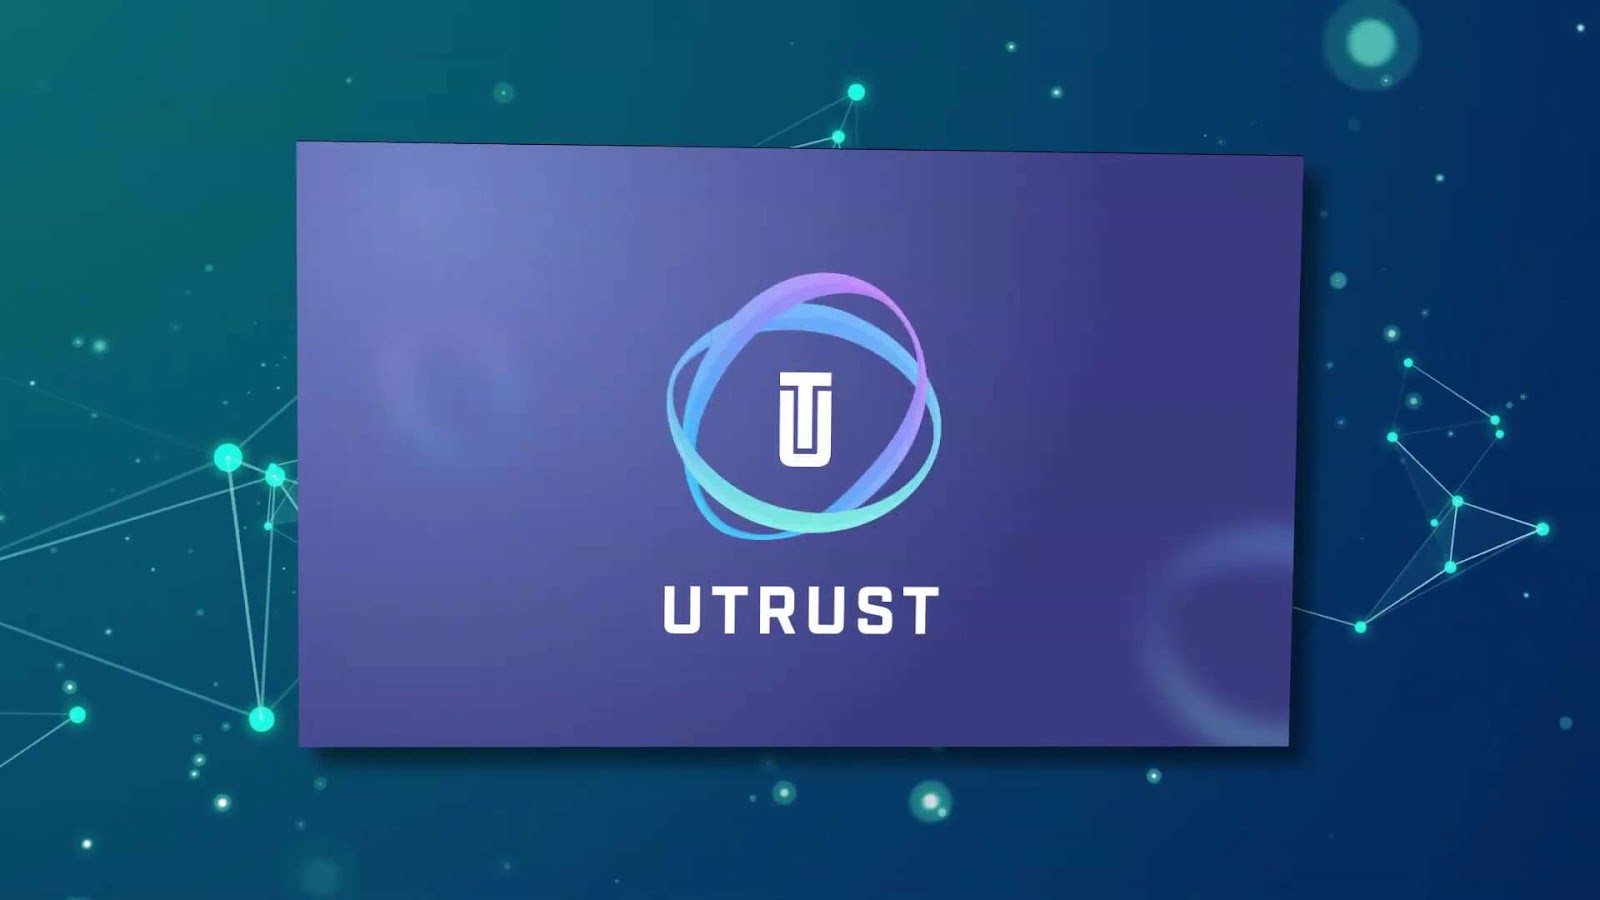 Utrus logo